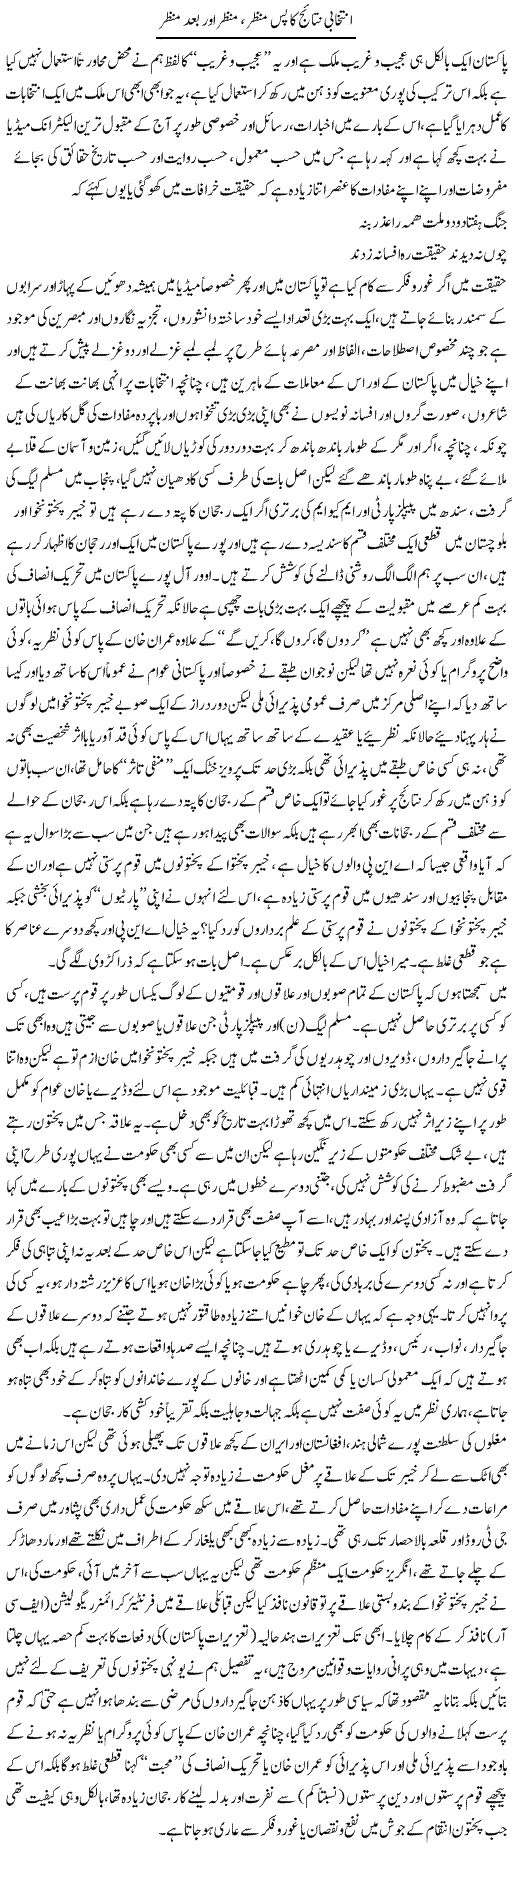 Intekhabi Nataij Ka Pase Manzar, Manzar Aur Bad Manzar | Saad Ullah Jan Barq | Daily Urdu Columns